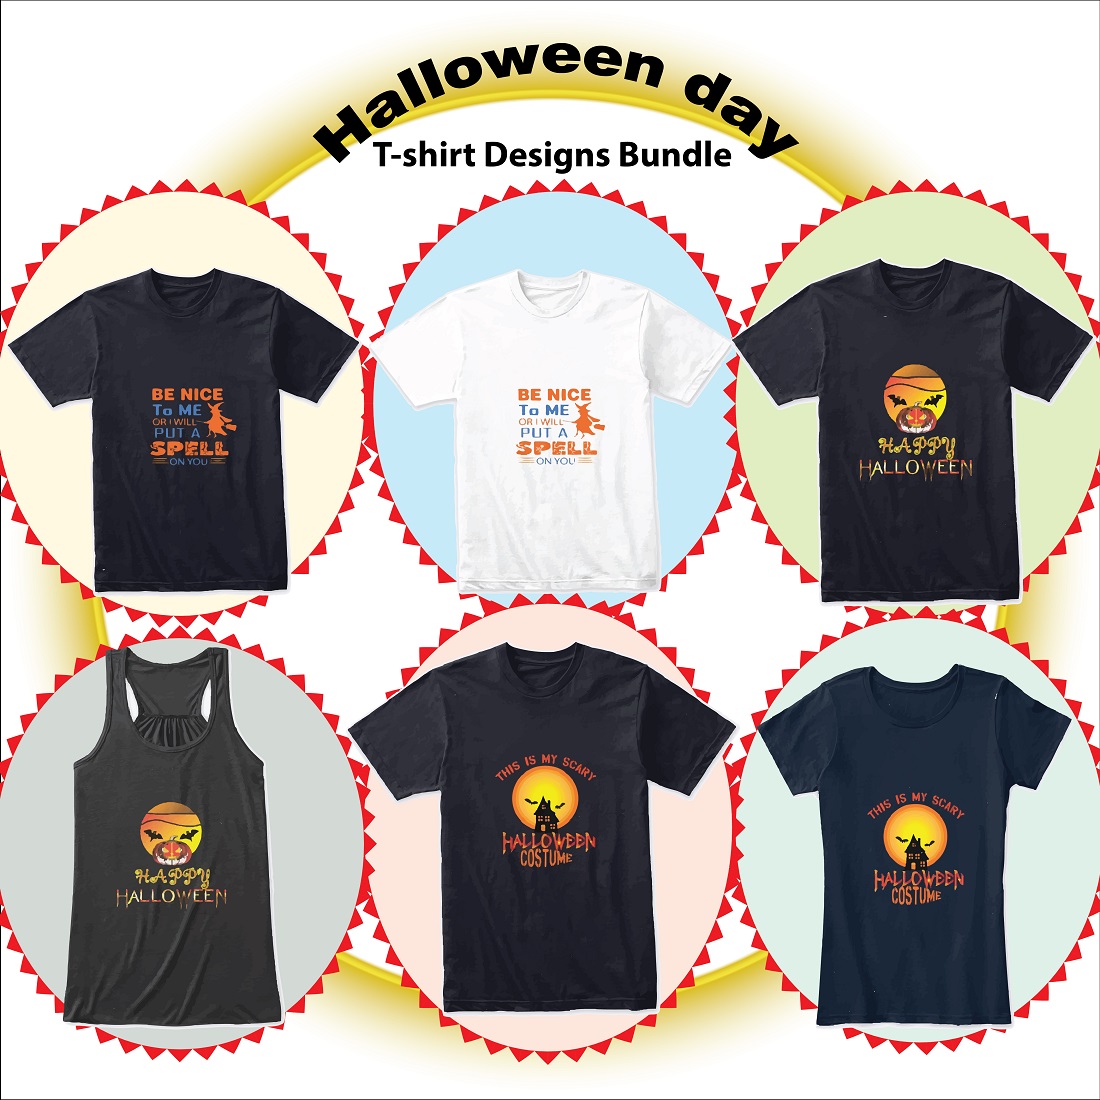 Halloween Day T-shirt Designs Bundles cover image.